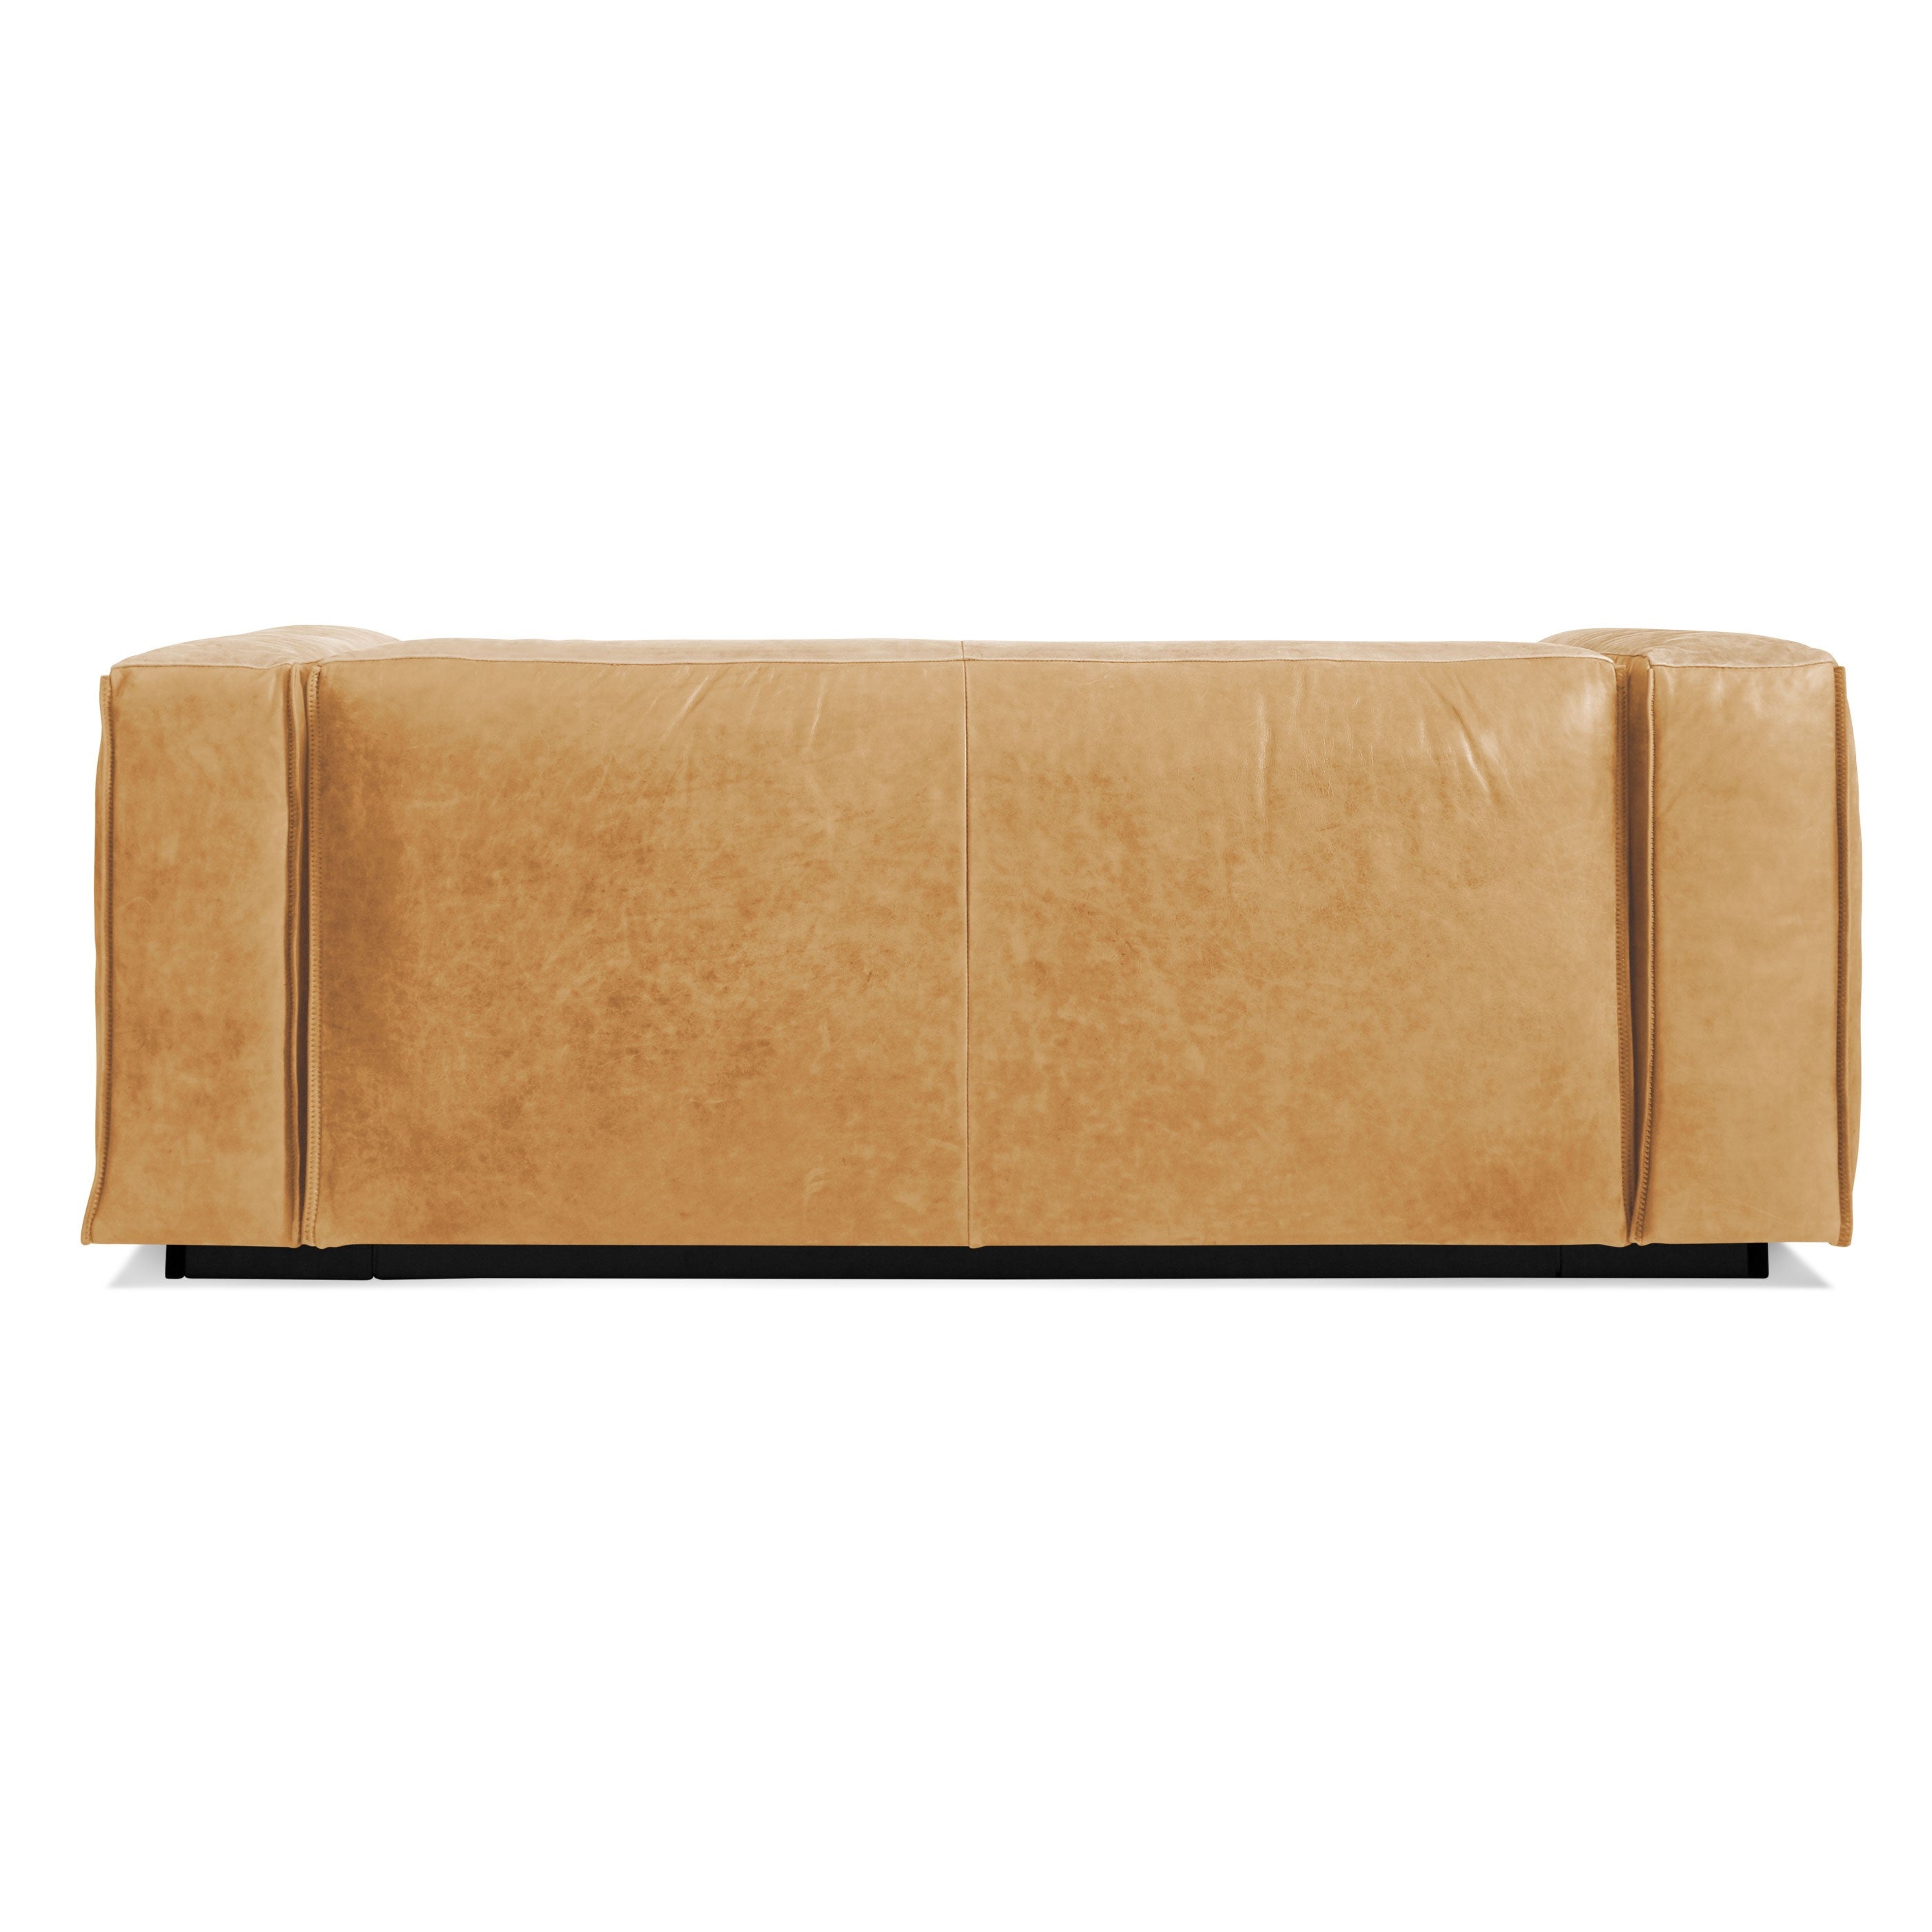 Cleon 74" Leather Sofa